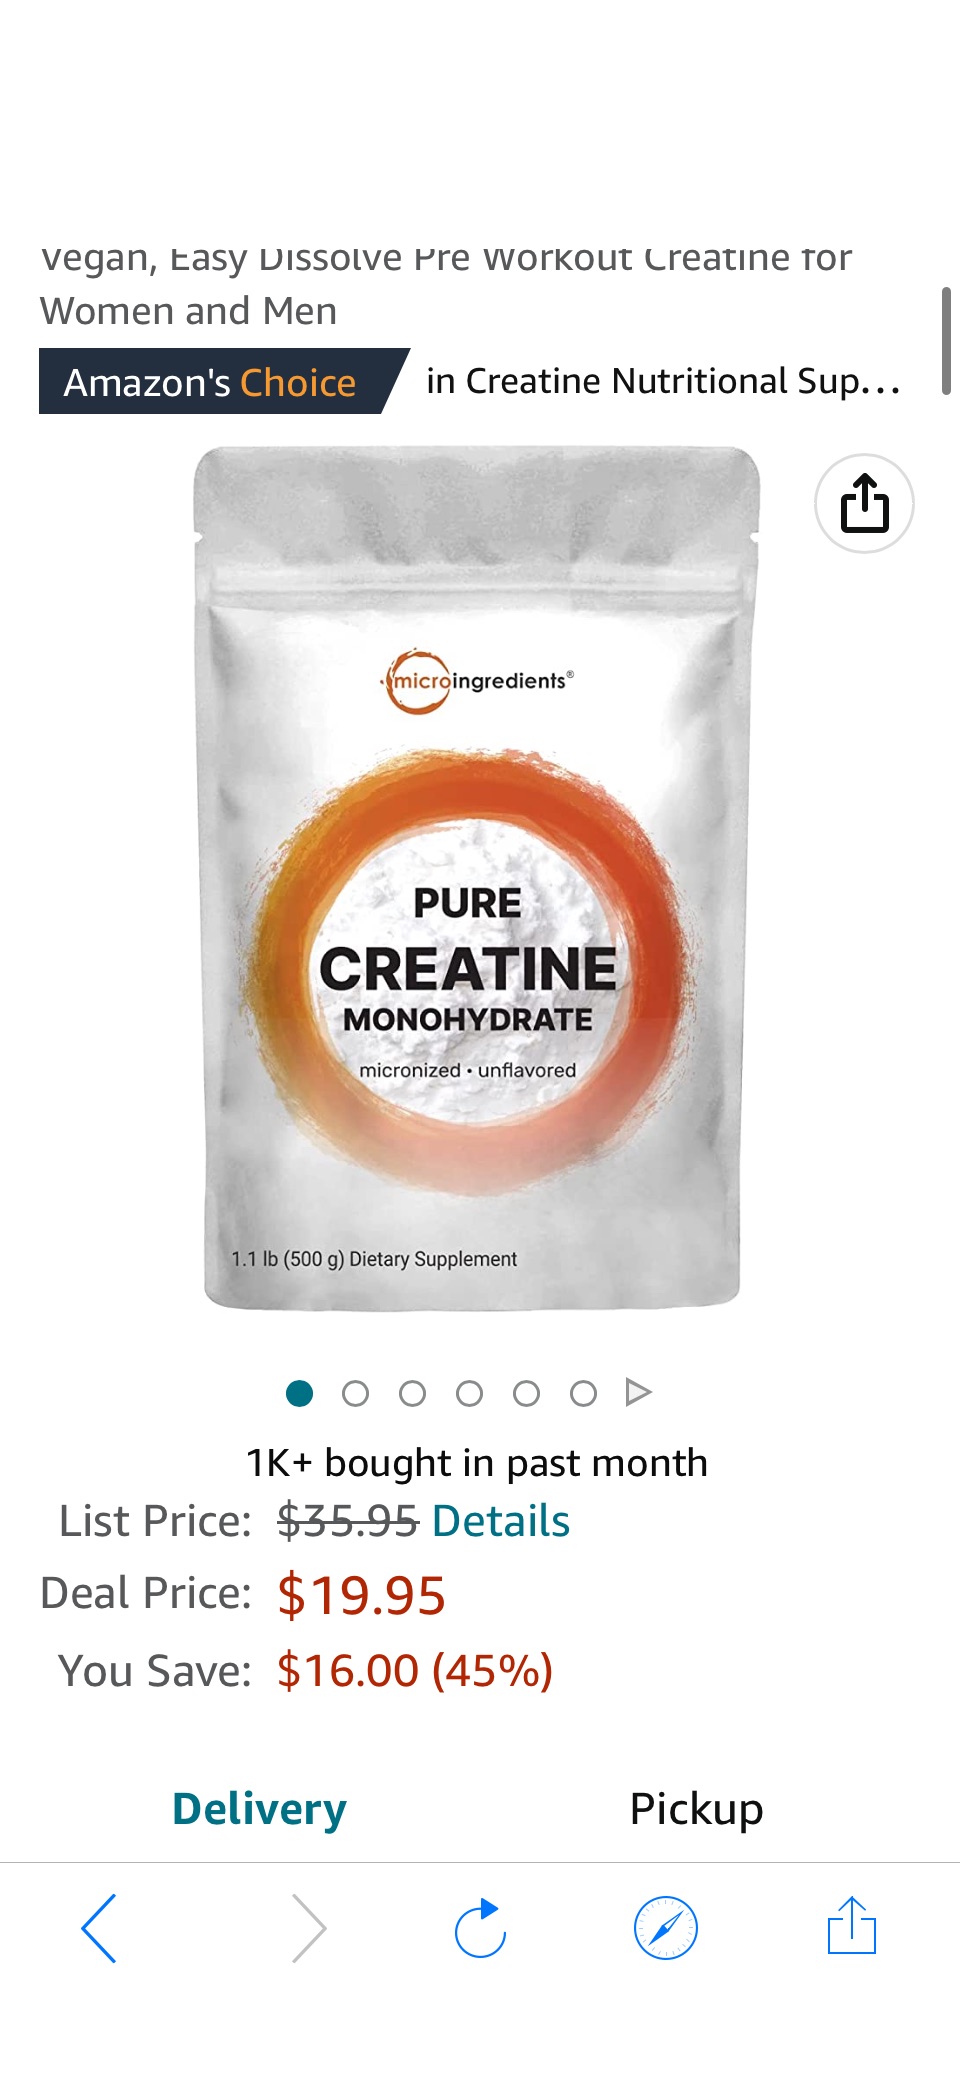 Amazon.com: Creatine Monohydrate Powder 500 Grams (1.1 LBS), 5000mg Per Serv, Micronized Creatine Powder, Unflavored, Pure, No Filler, Keto & Vegan, Easy Dissolve Pre原价35.95